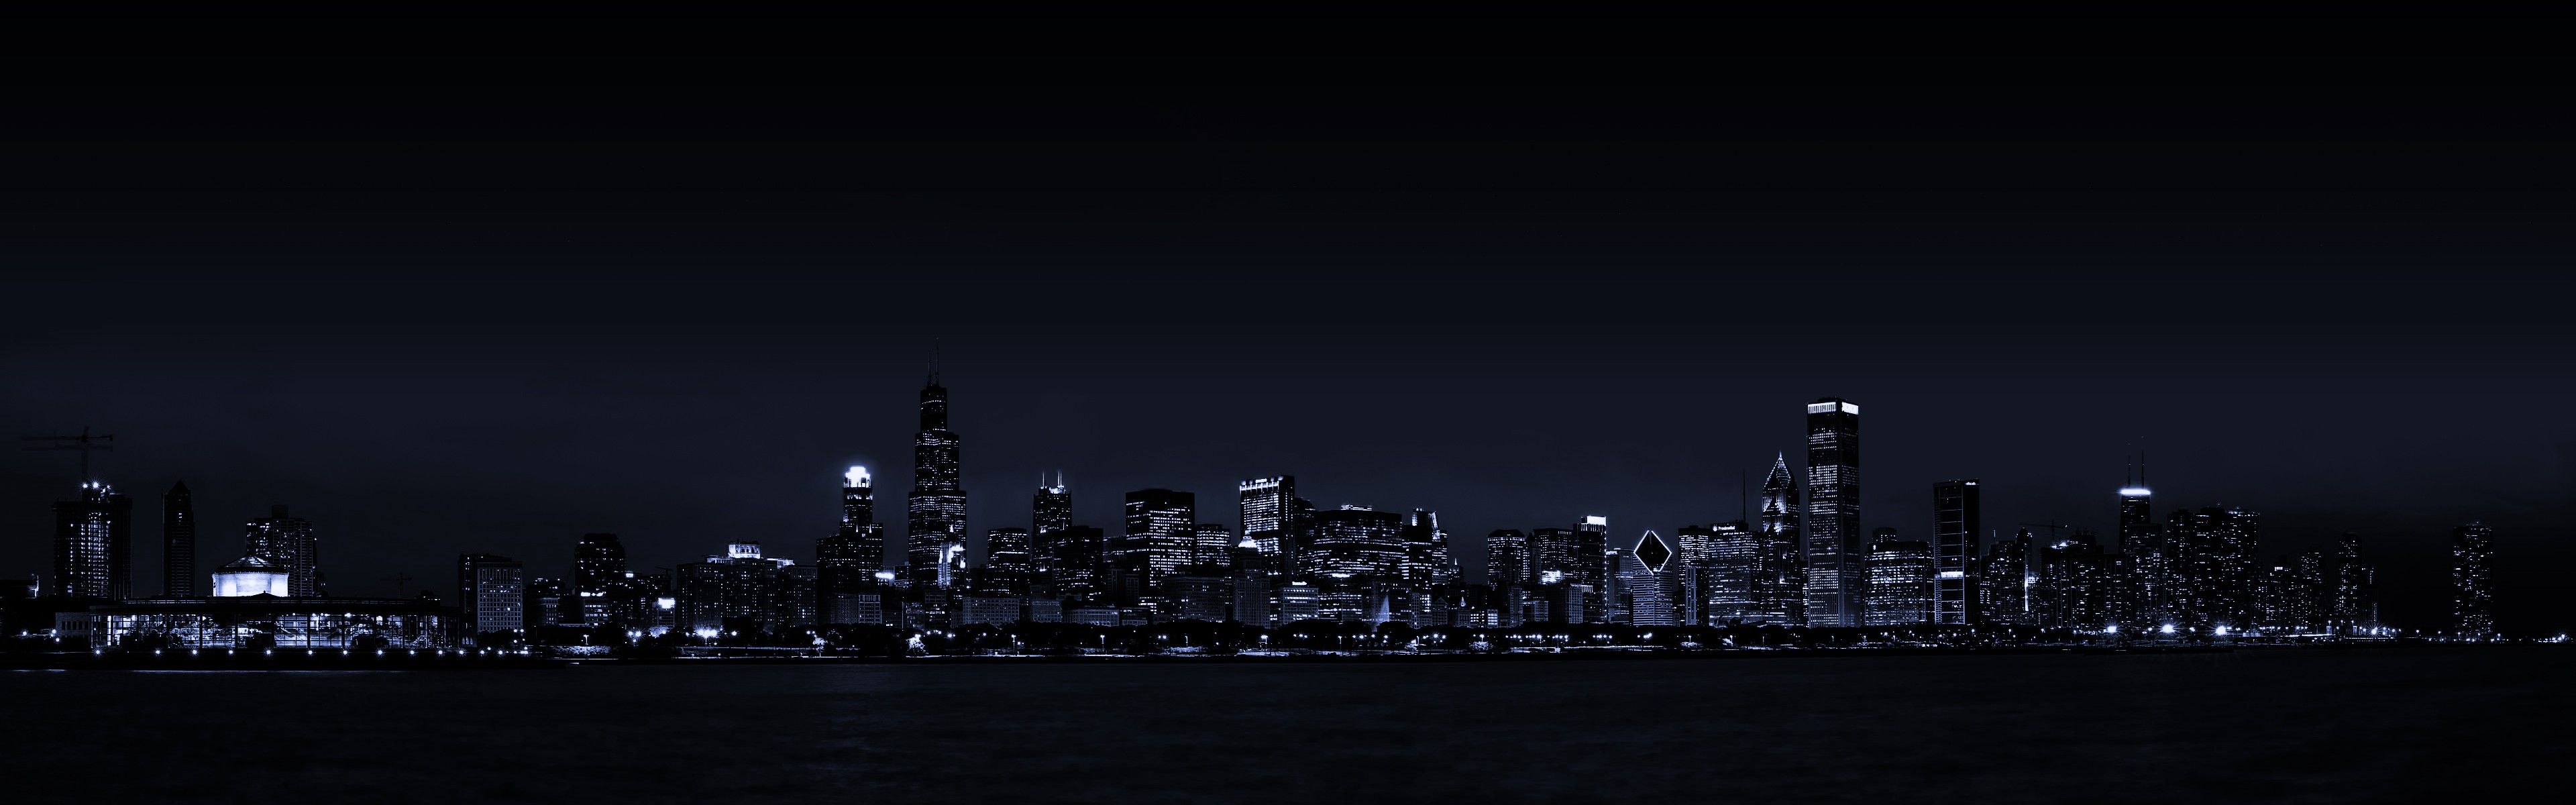 General 3840x1200 multiple display cityscape night city lights dark Chicago USA city dark background wide screen